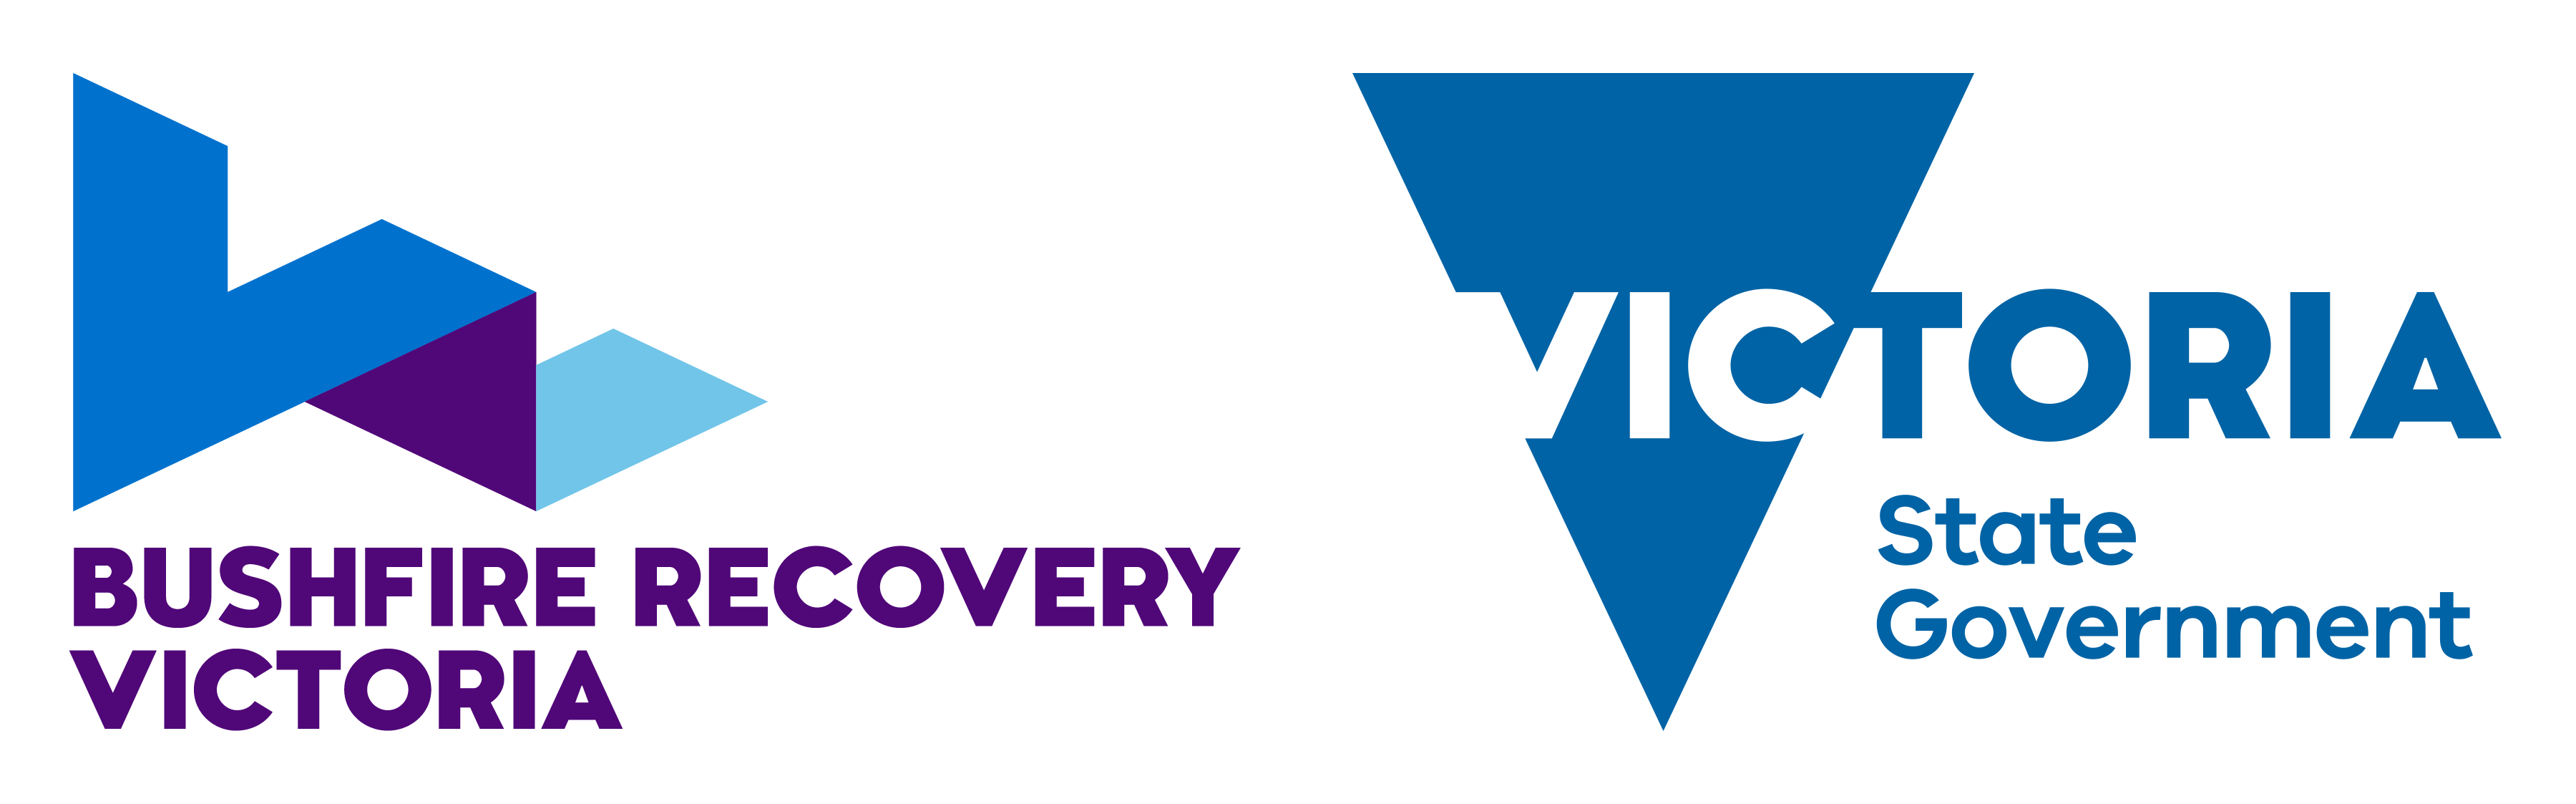 2019-20-eastern-victorian-bushfire-rebuilding-rebate-programs